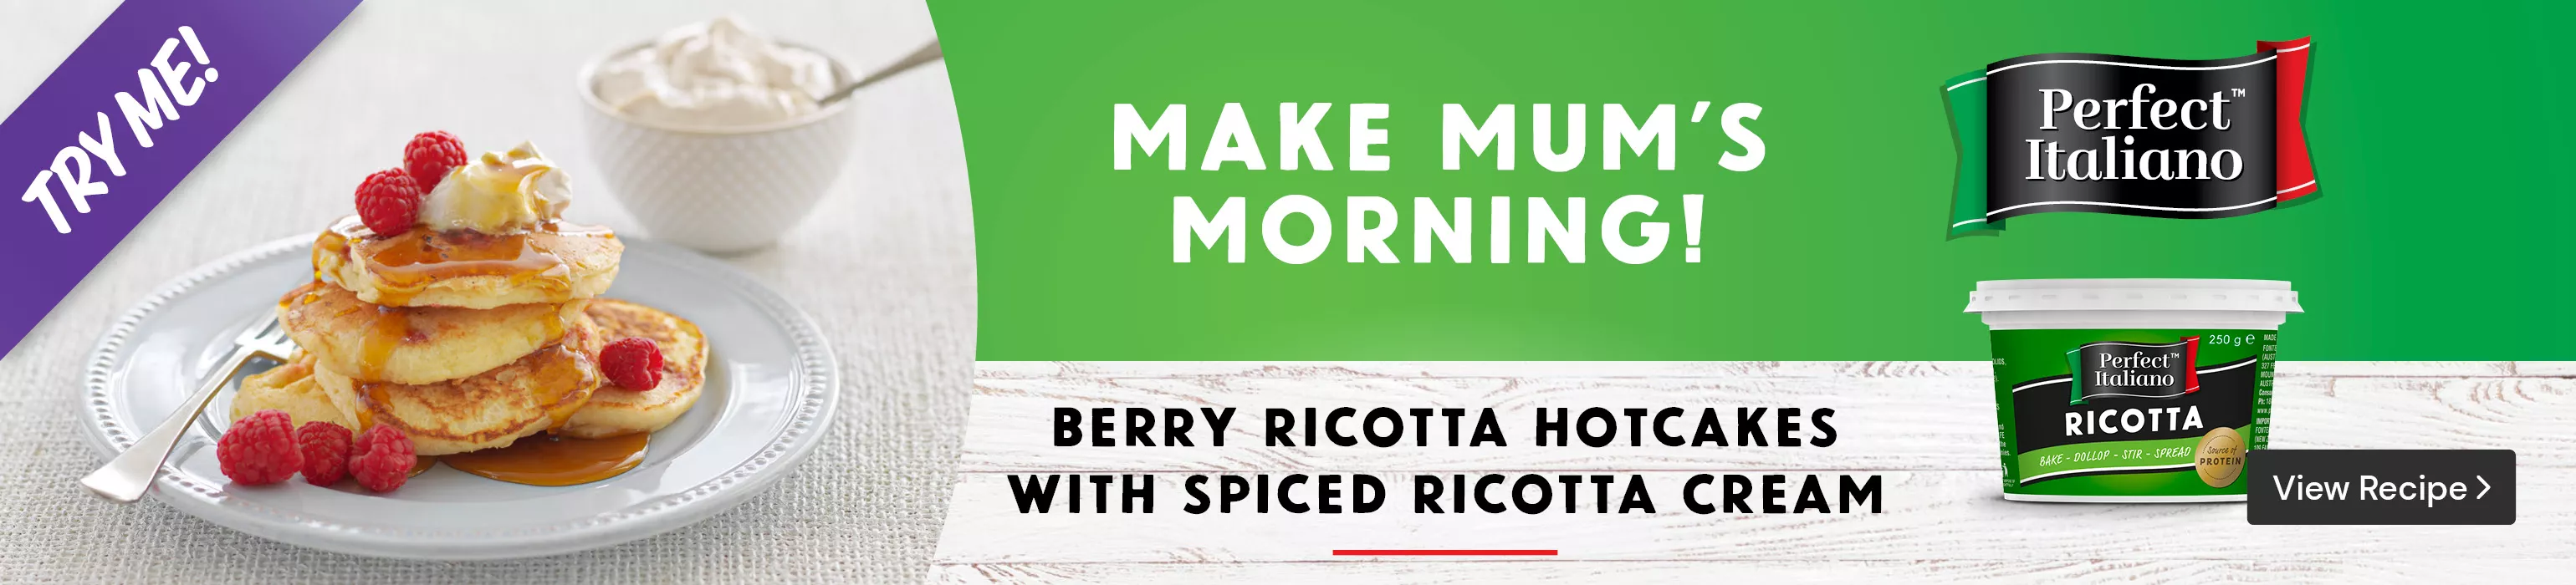 View the Berry Ricotta Hotcakes Recipe